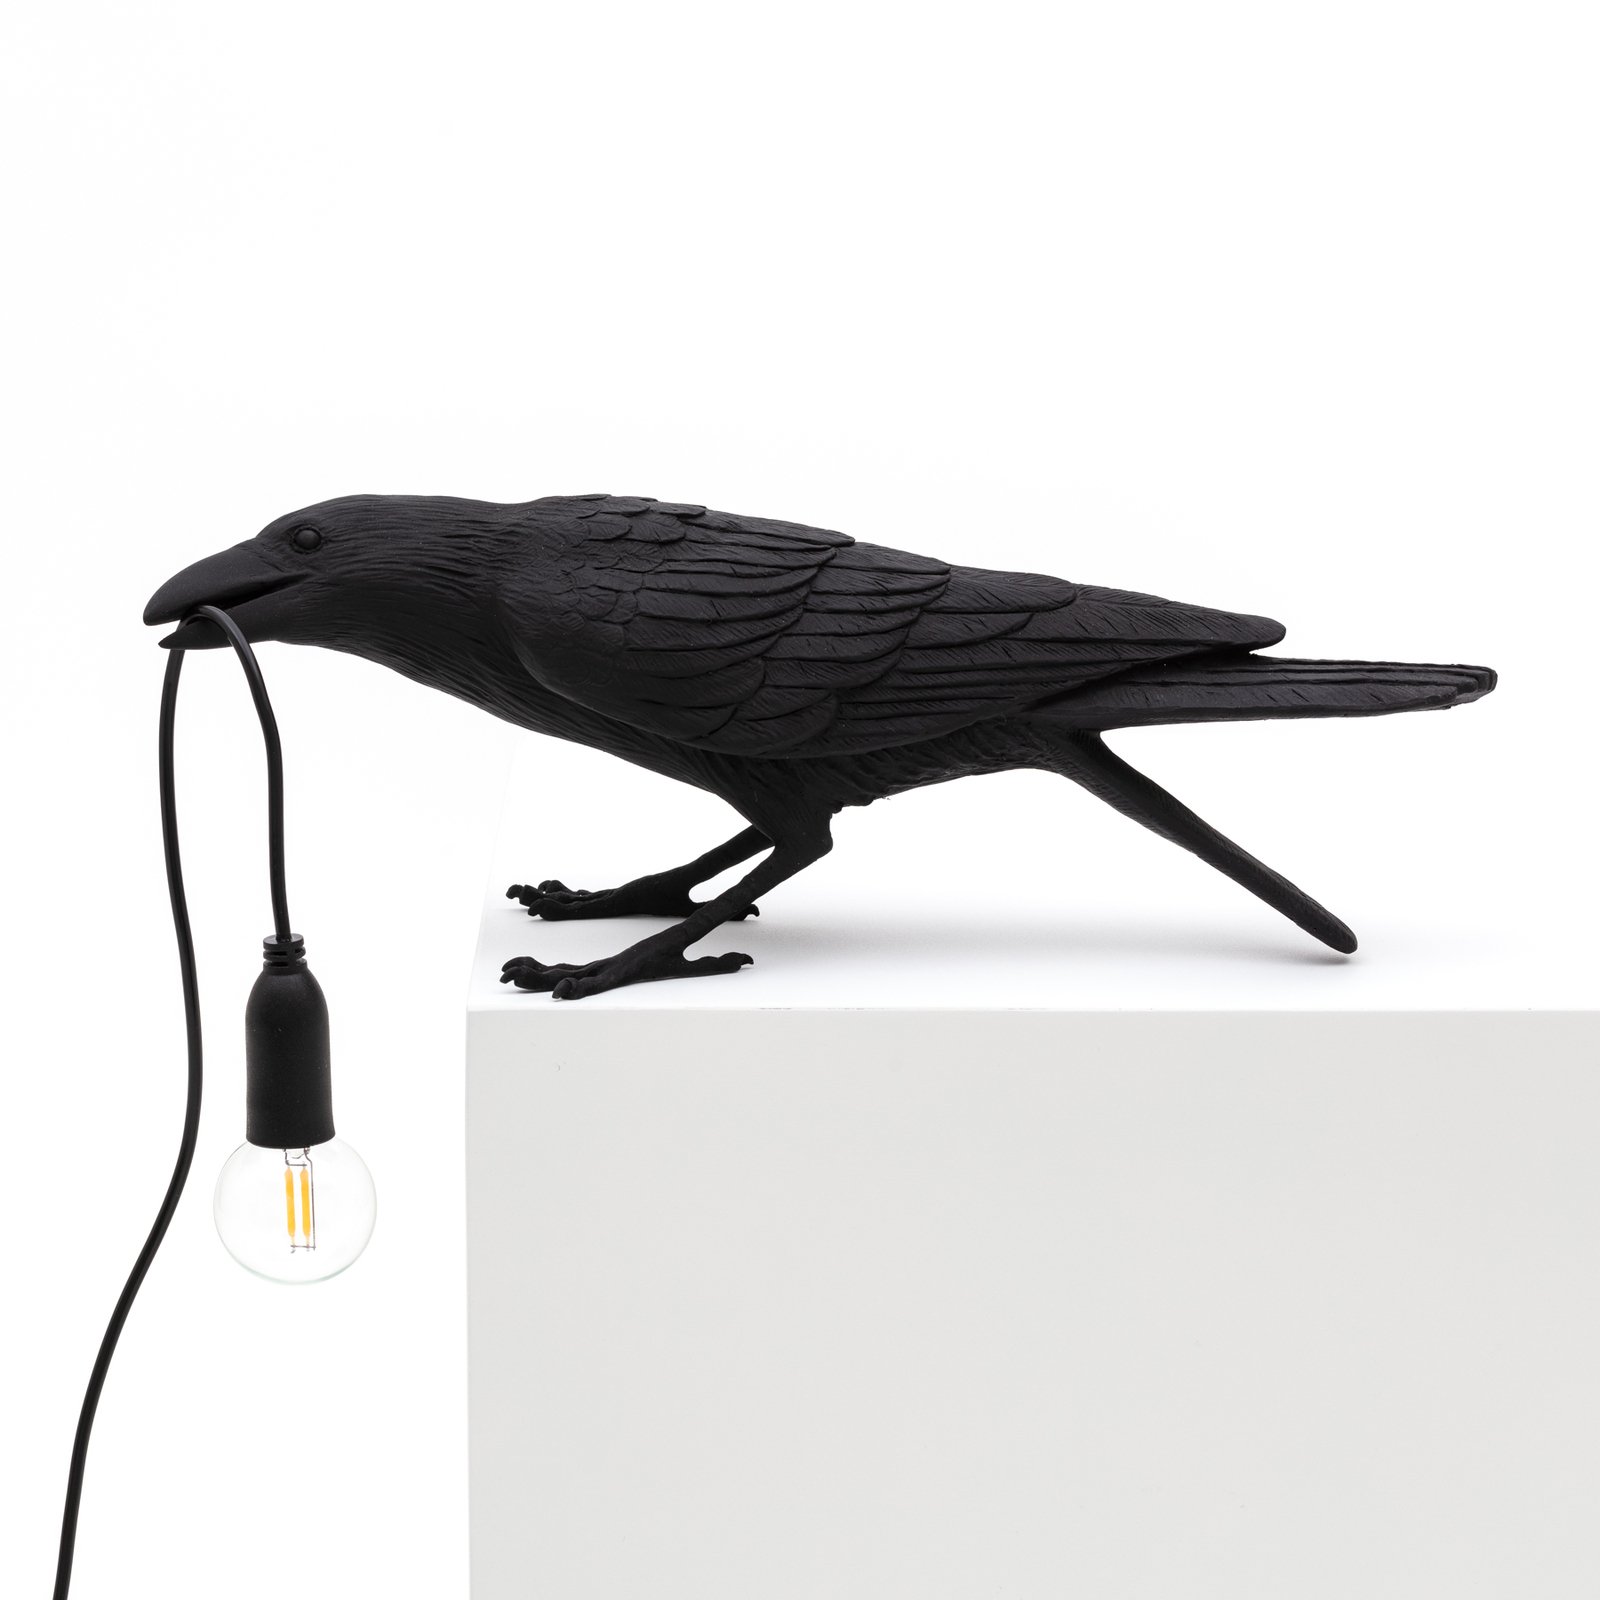 SELETTI Bird Lamp LED-Dekolampe, spielend schwarz